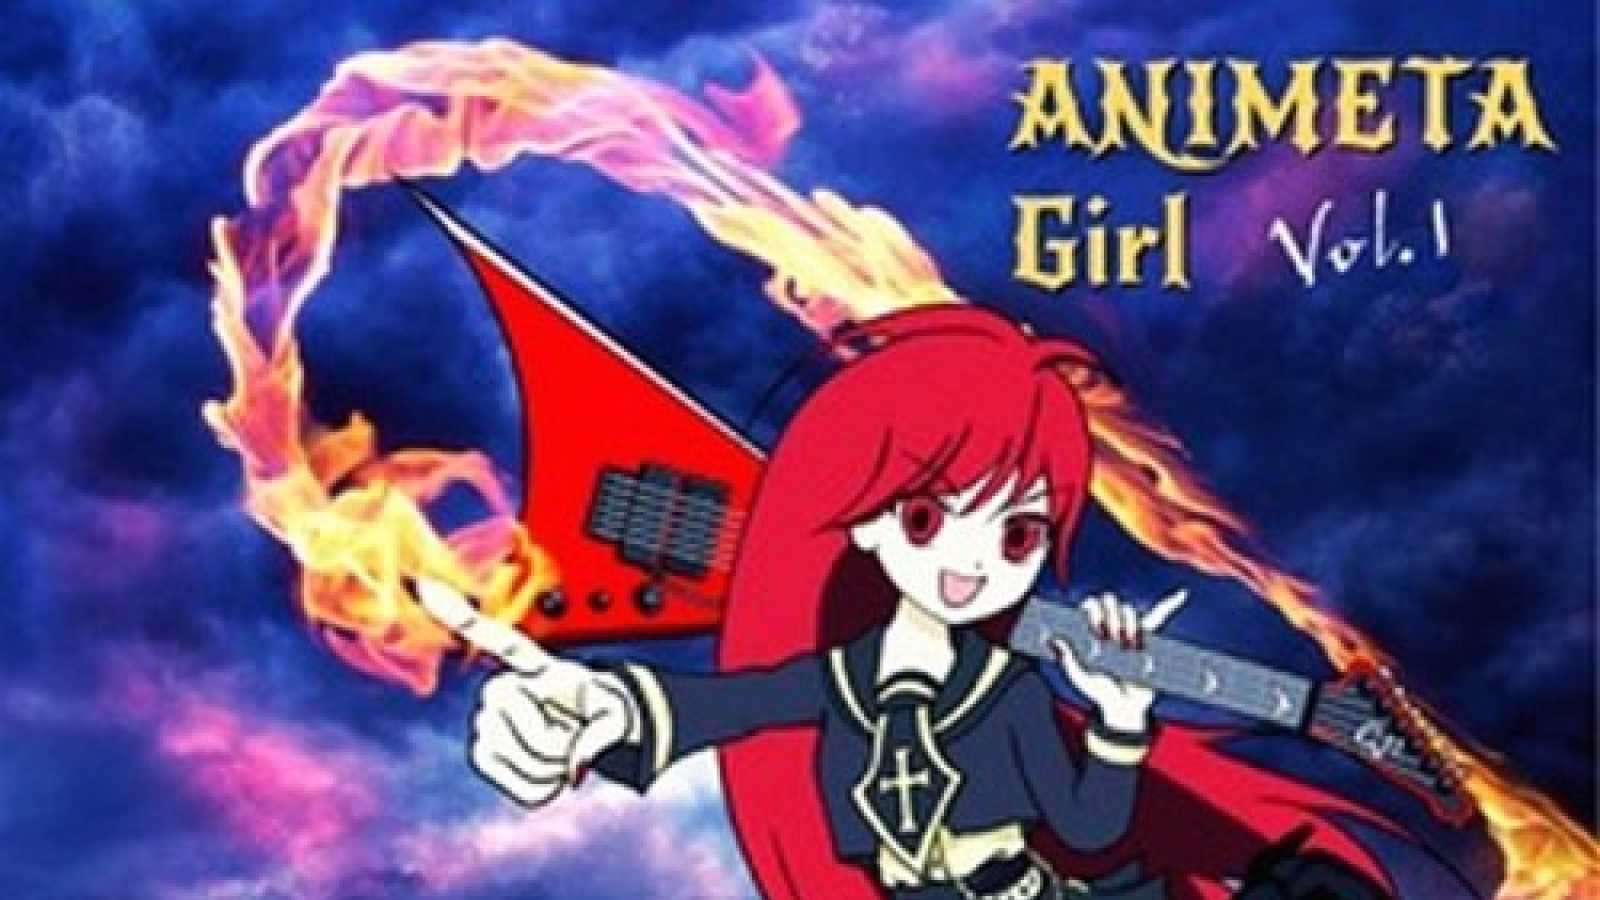 ANIMETA Girl - ANIMETA Girl Vol.1 © TEARS MUSIC. All rights reserved.